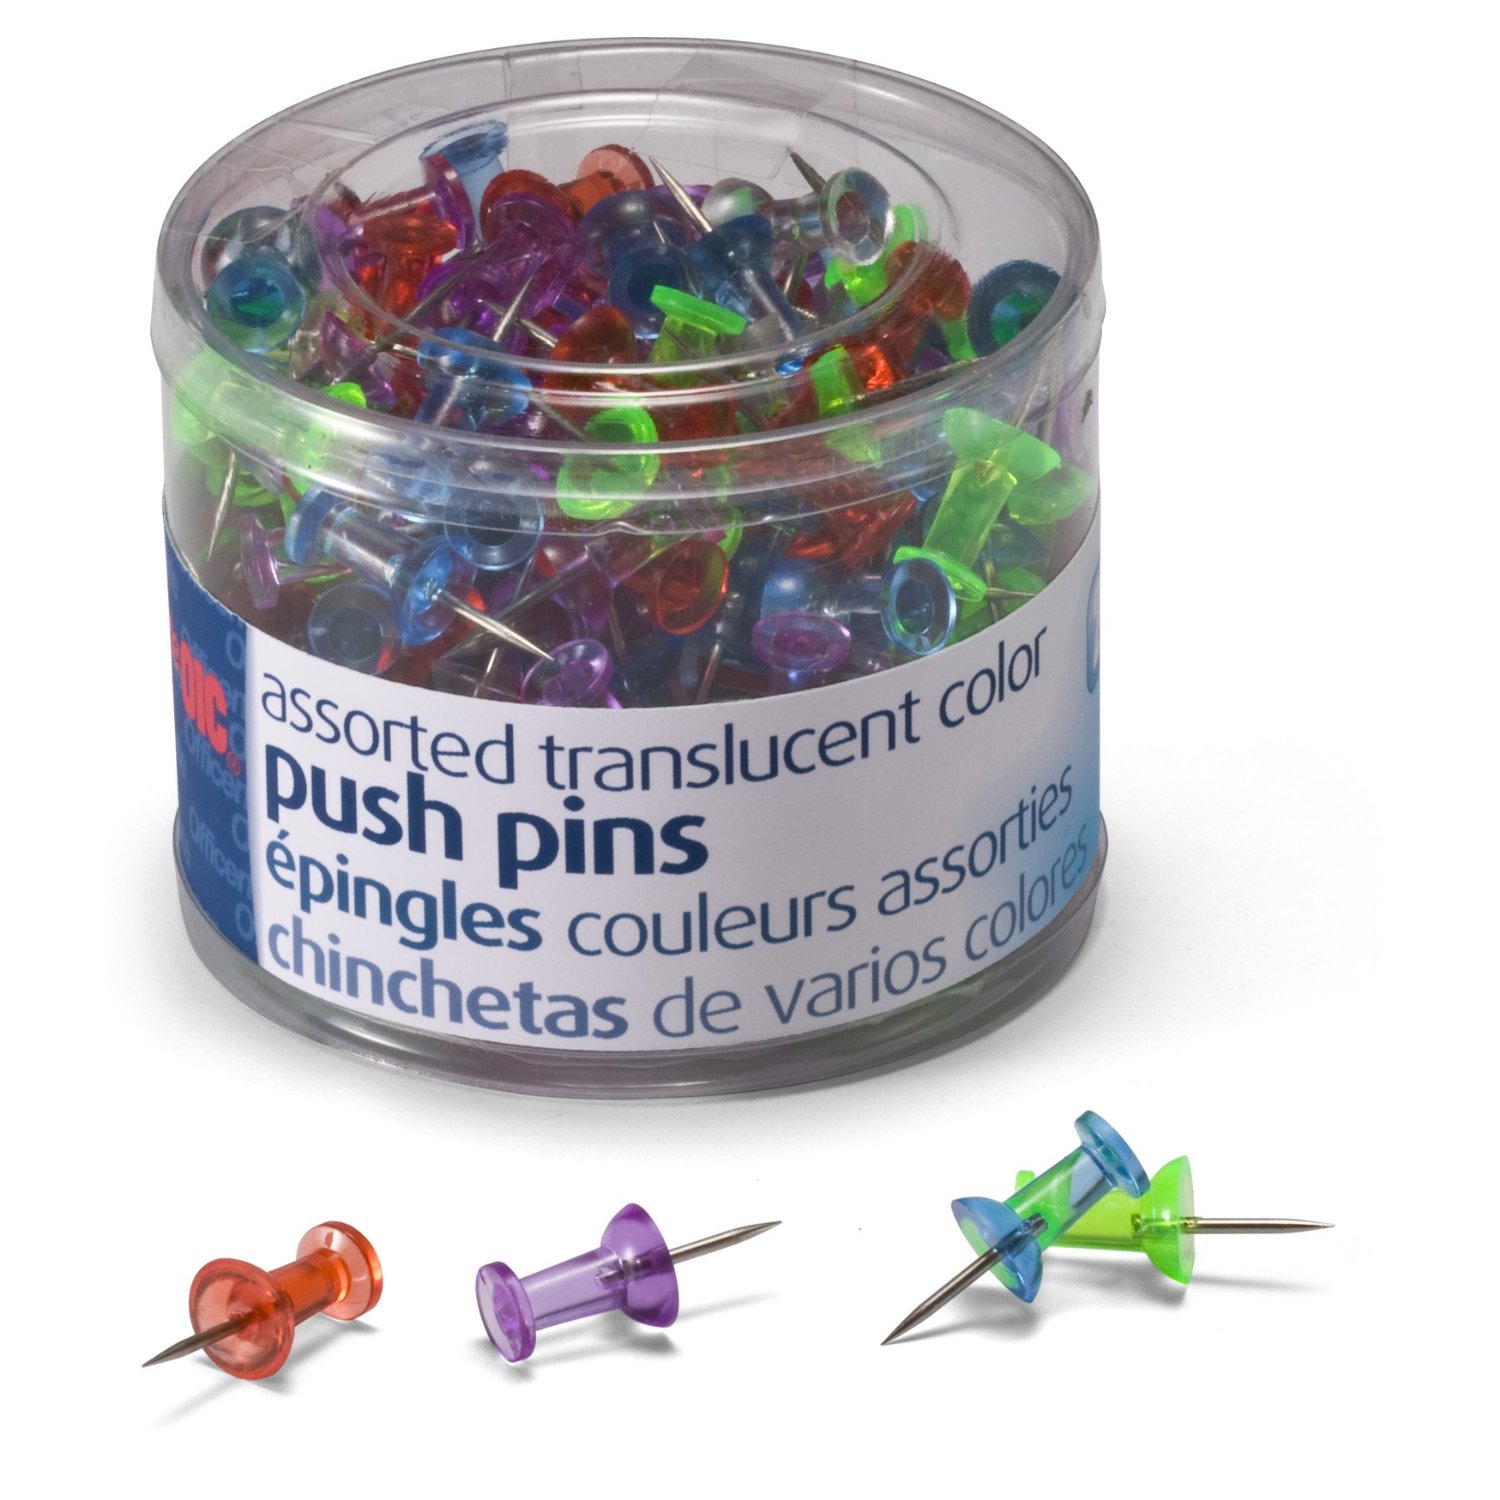 200 translucent color push pins per tub